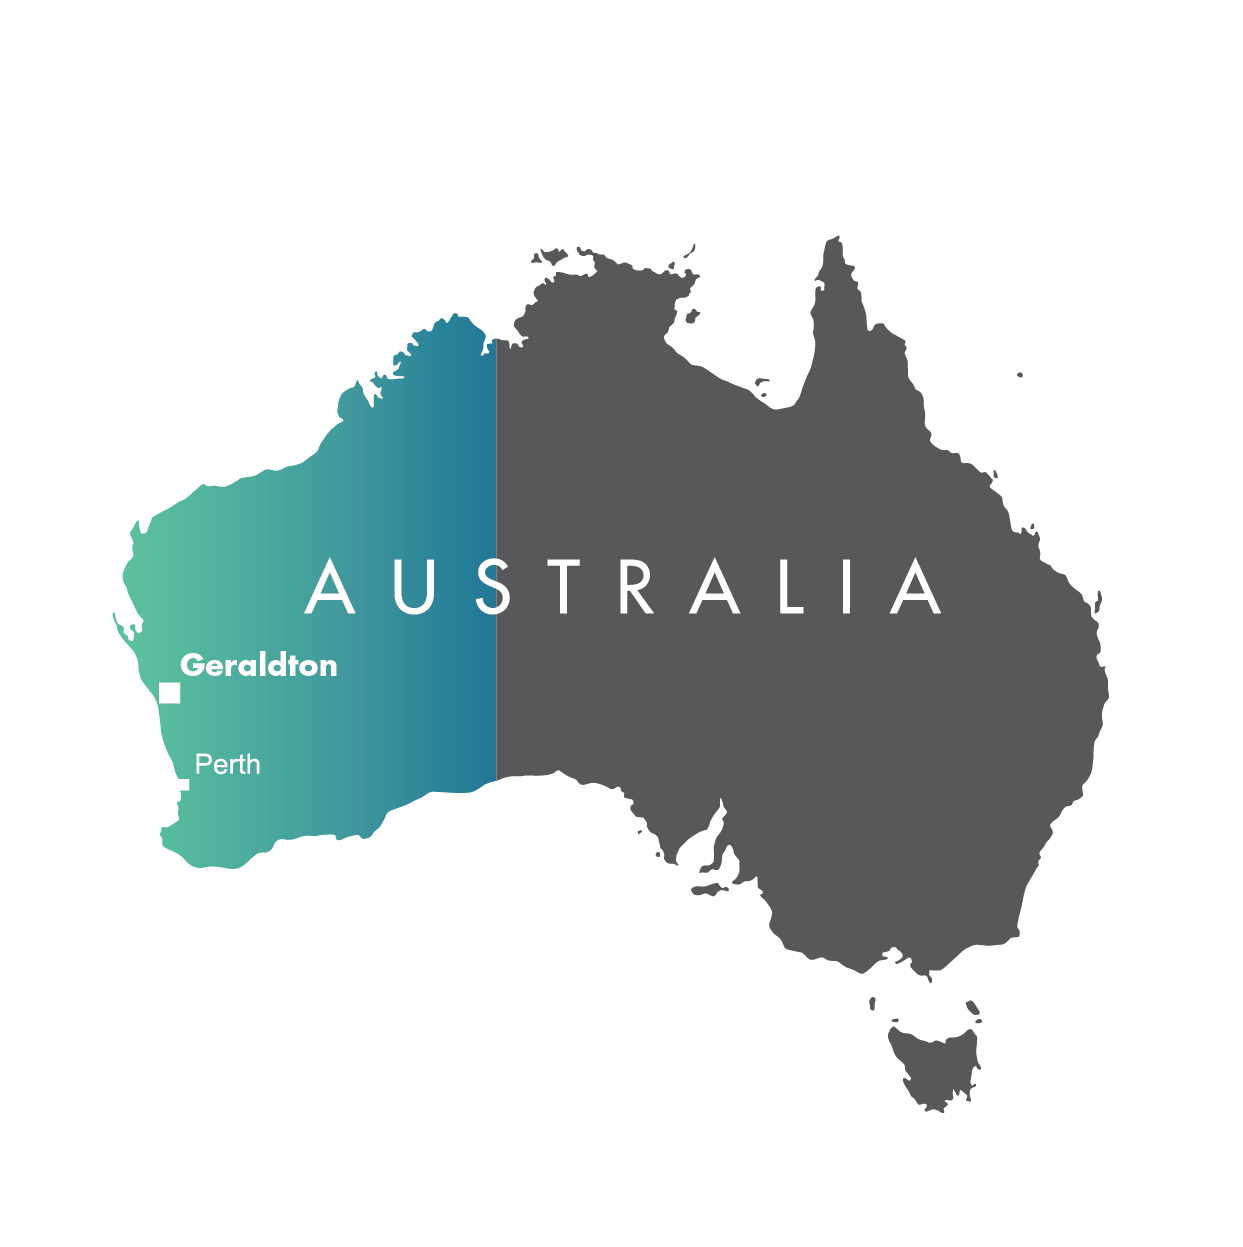 Map of Australia, showing Geraldton's location in Western Australia